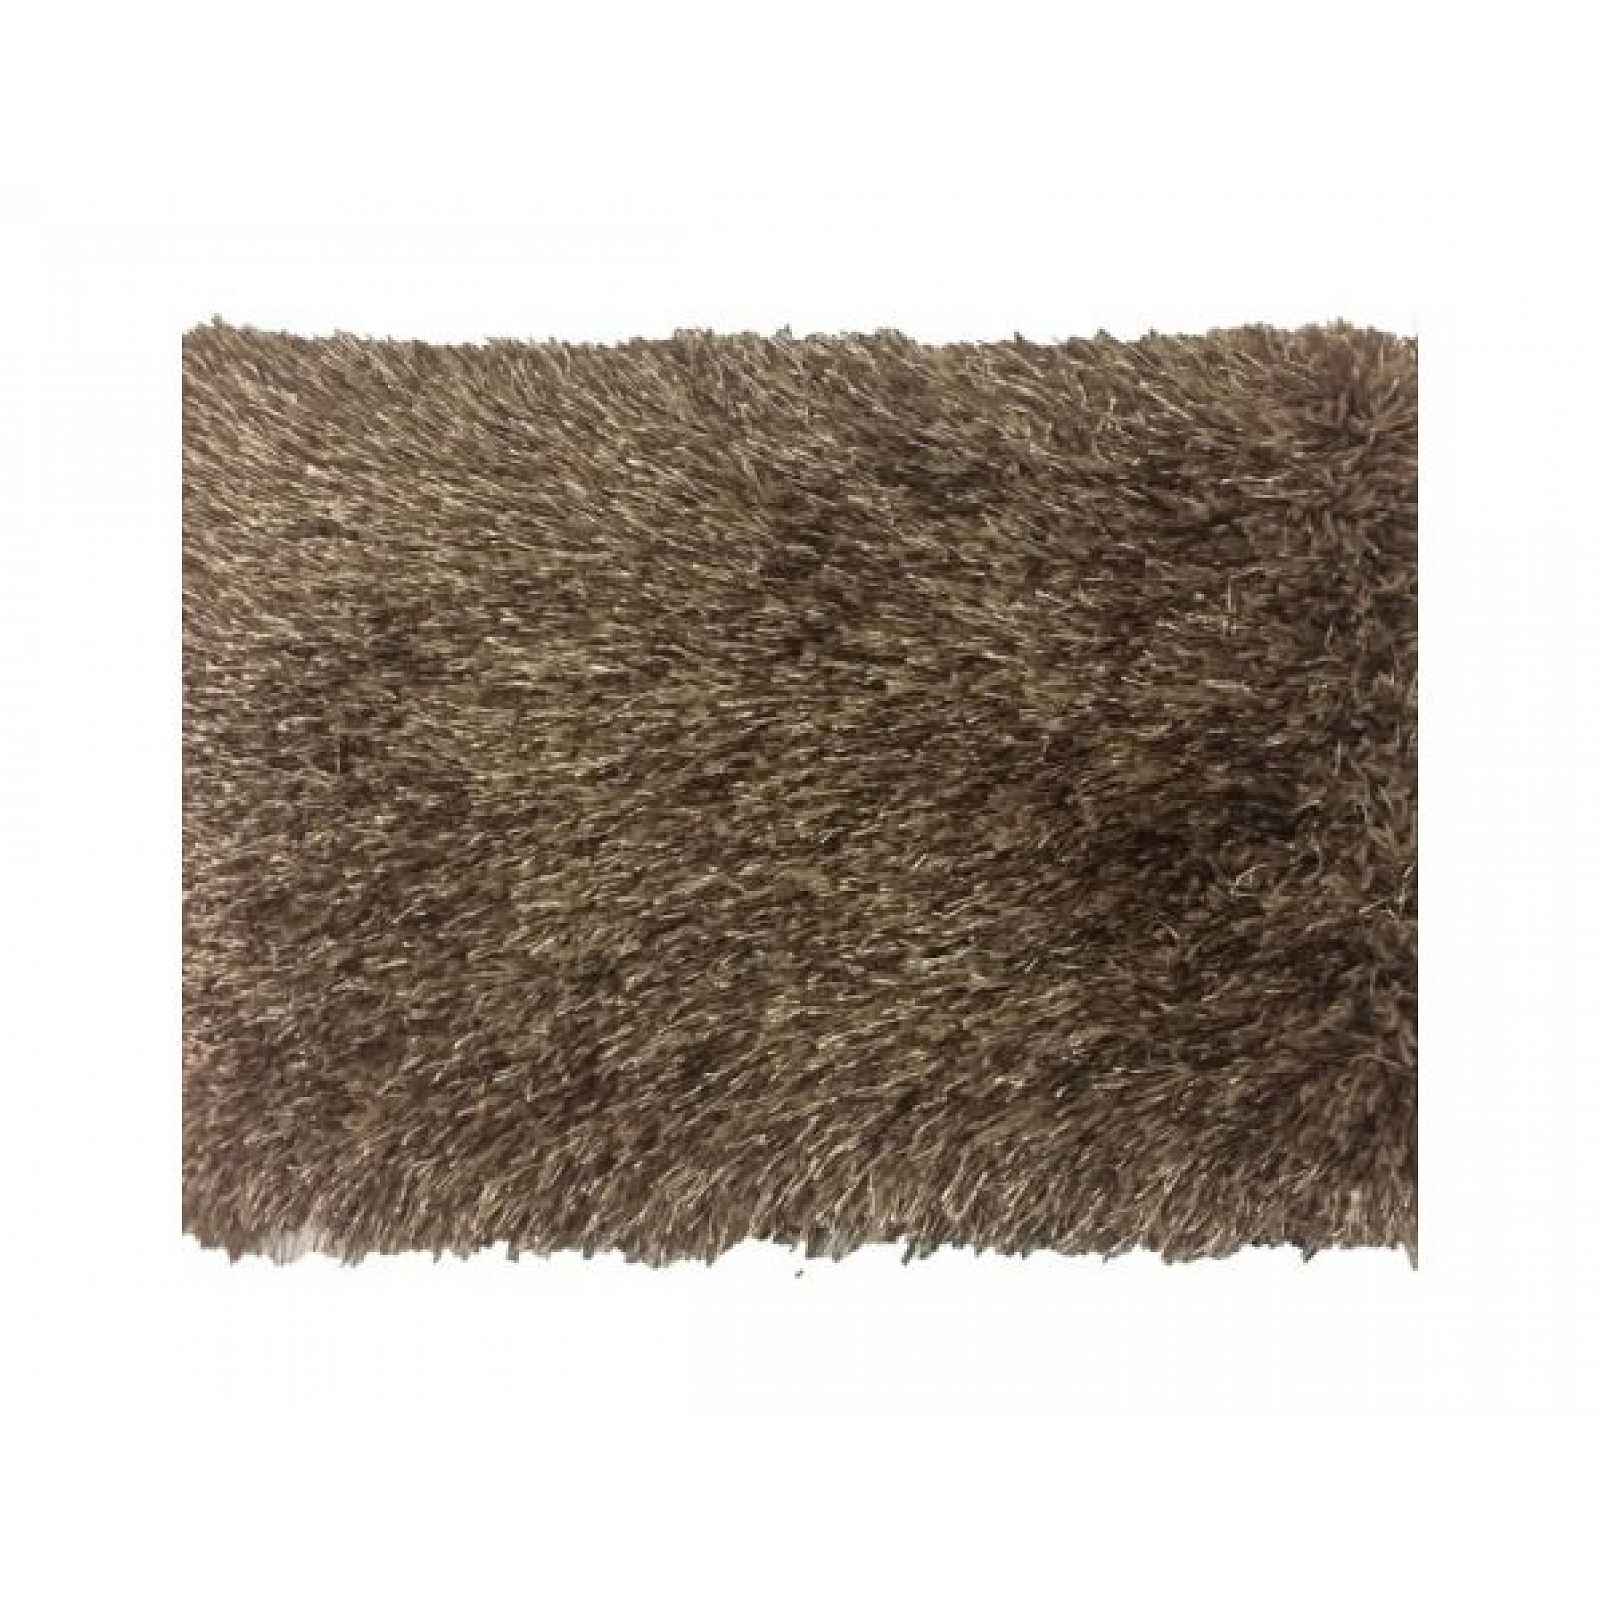 Hnědý koberec GARSON, 200x300 cm